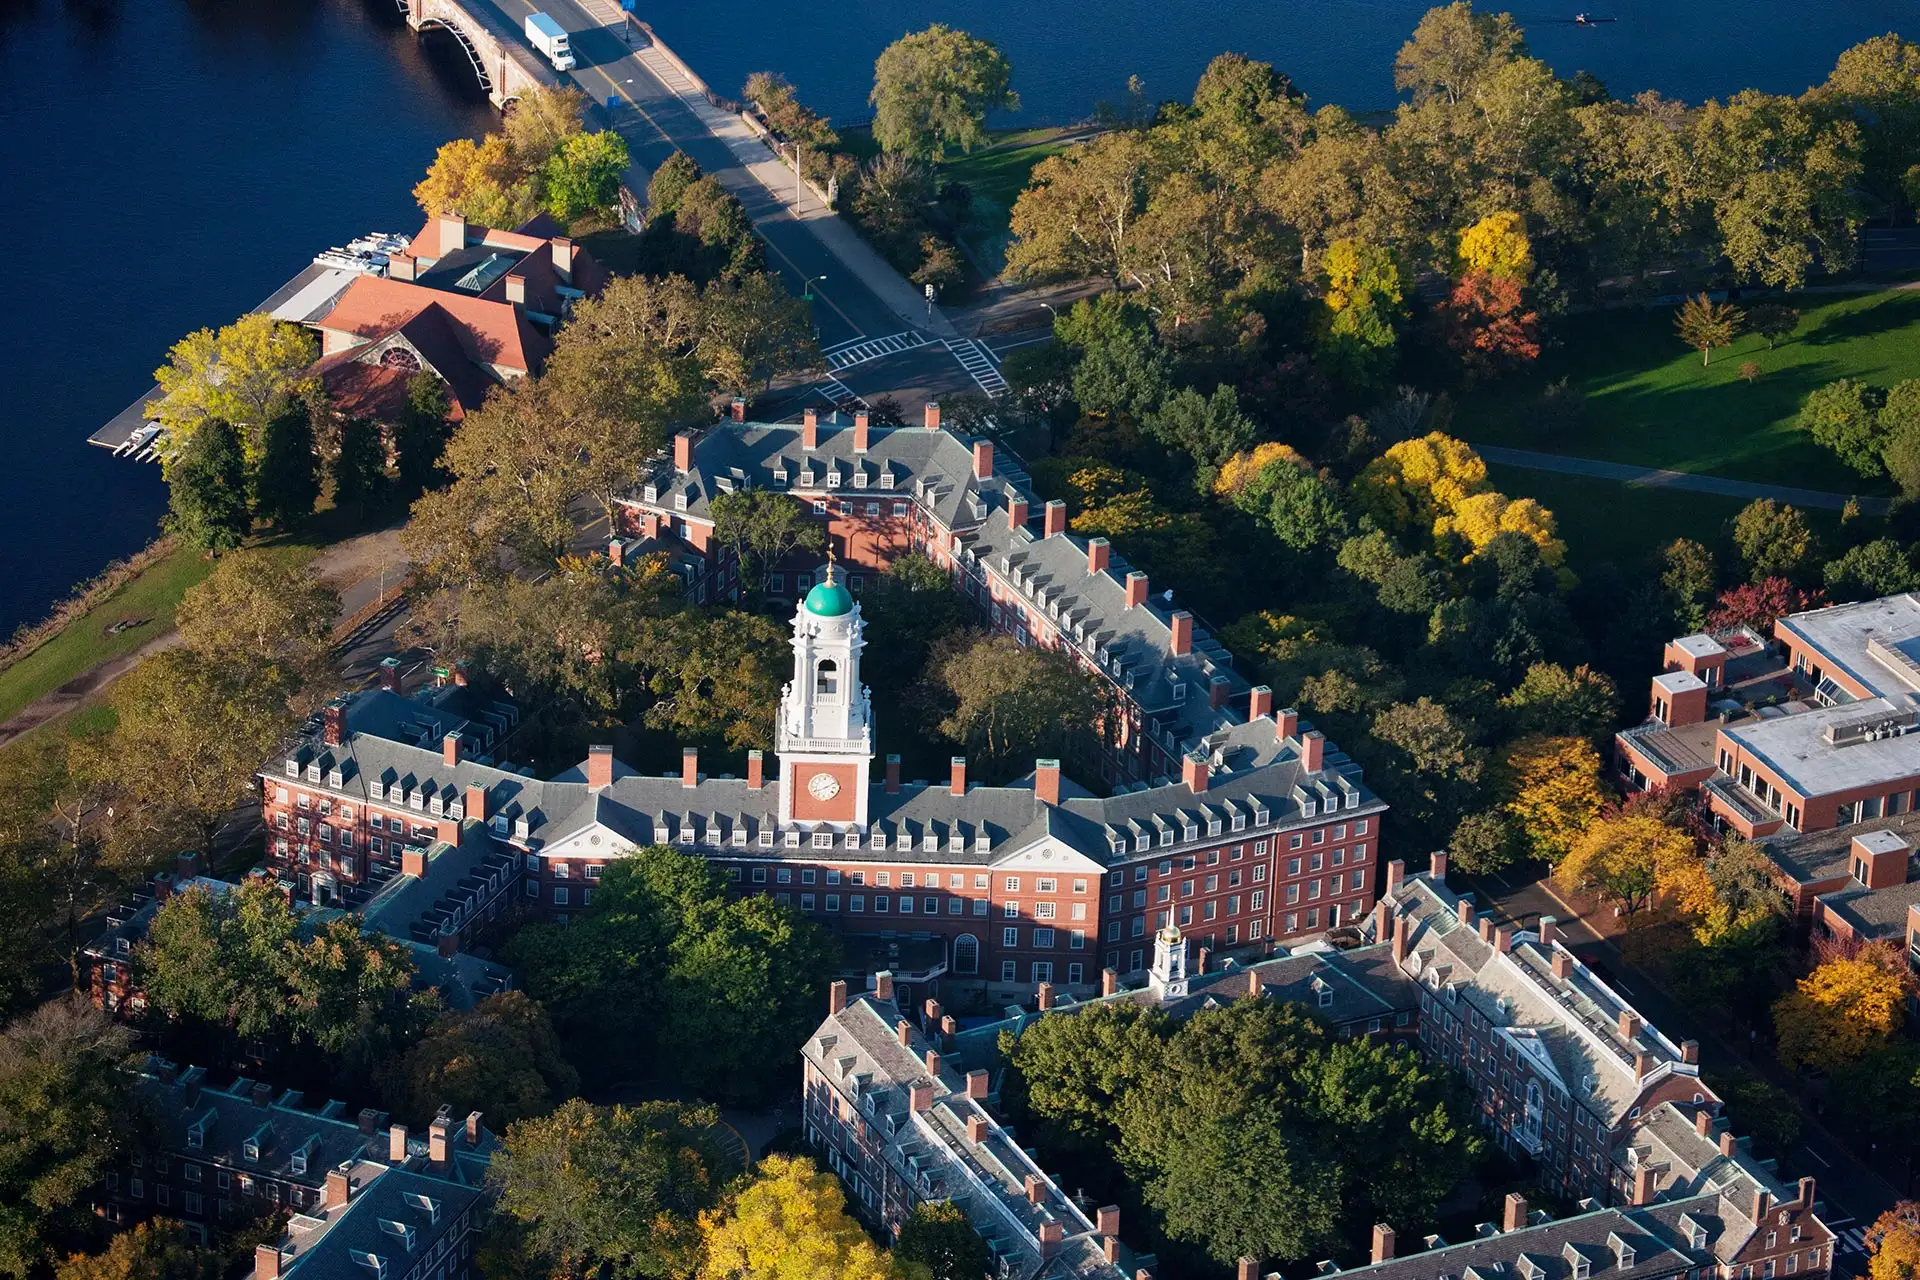 An aerial shot of Harvard's campus; Photo Courtesy of Joseph Sohm/Shutterstock.com